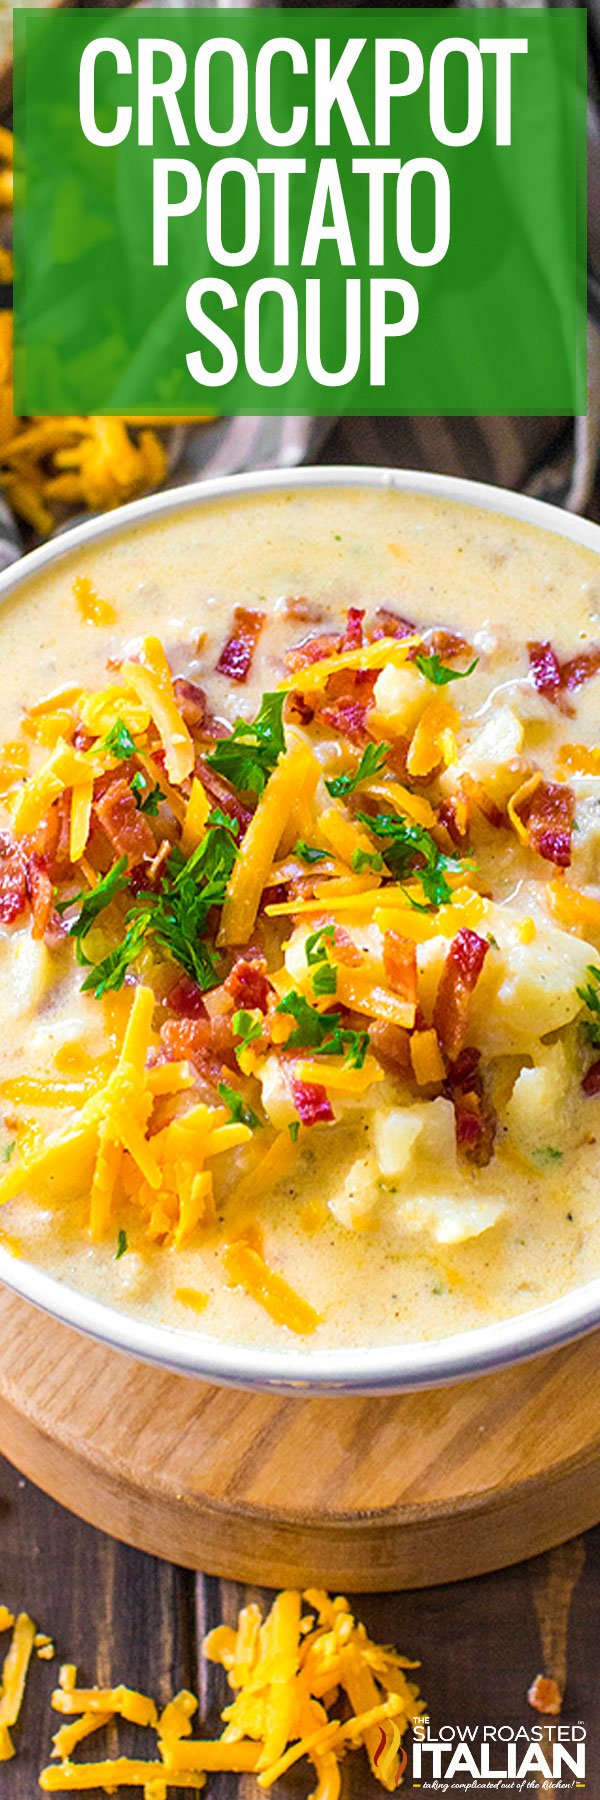 titled image (and shown): crockpot potato soup